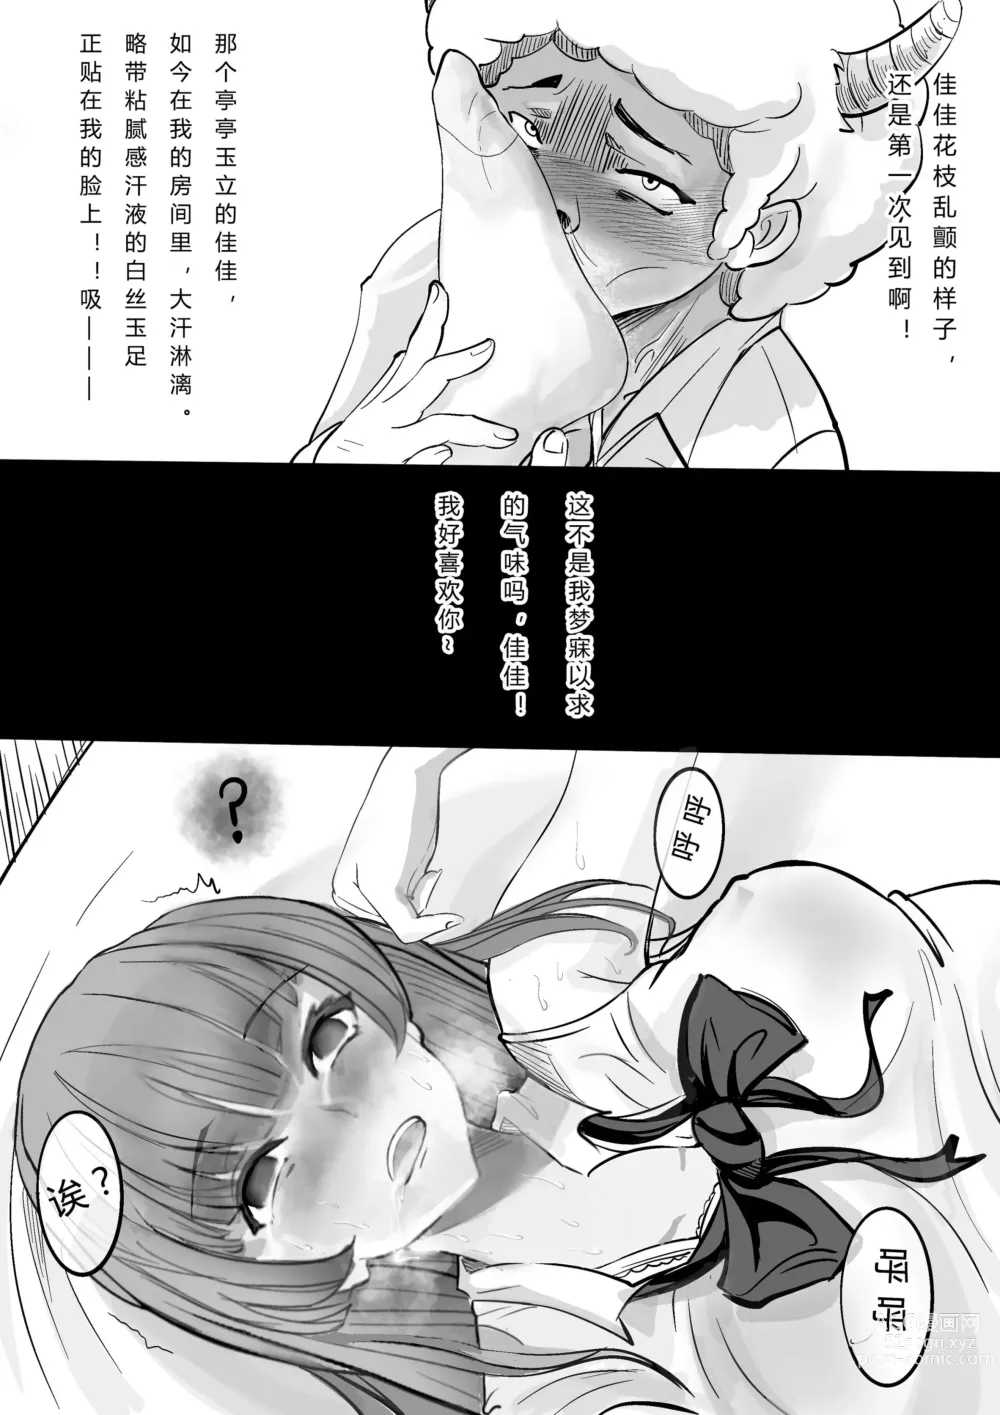 Page 7 of doujinshi GOAT-goat 特典Ⅰ